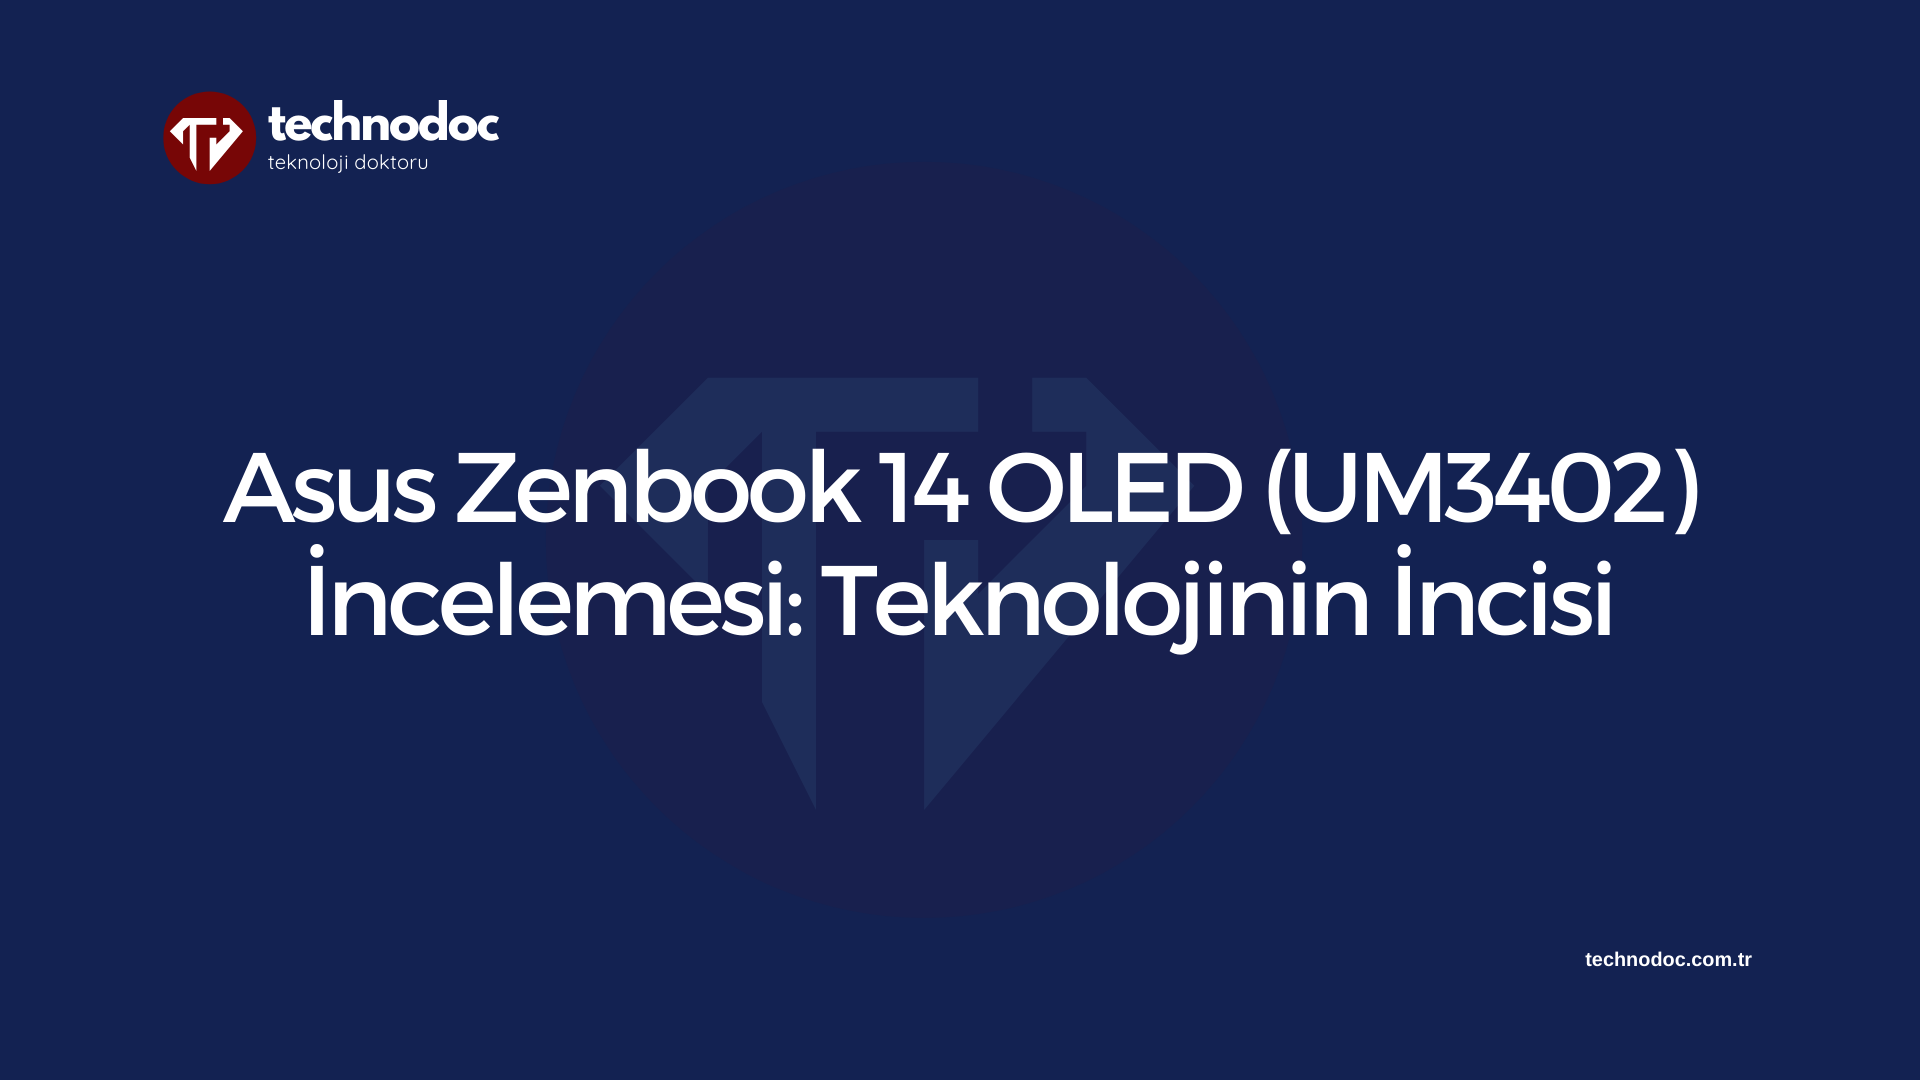 Asus Zenbook 14 OLED (UM3402) İncelemesi: Teknolojinin İncisi